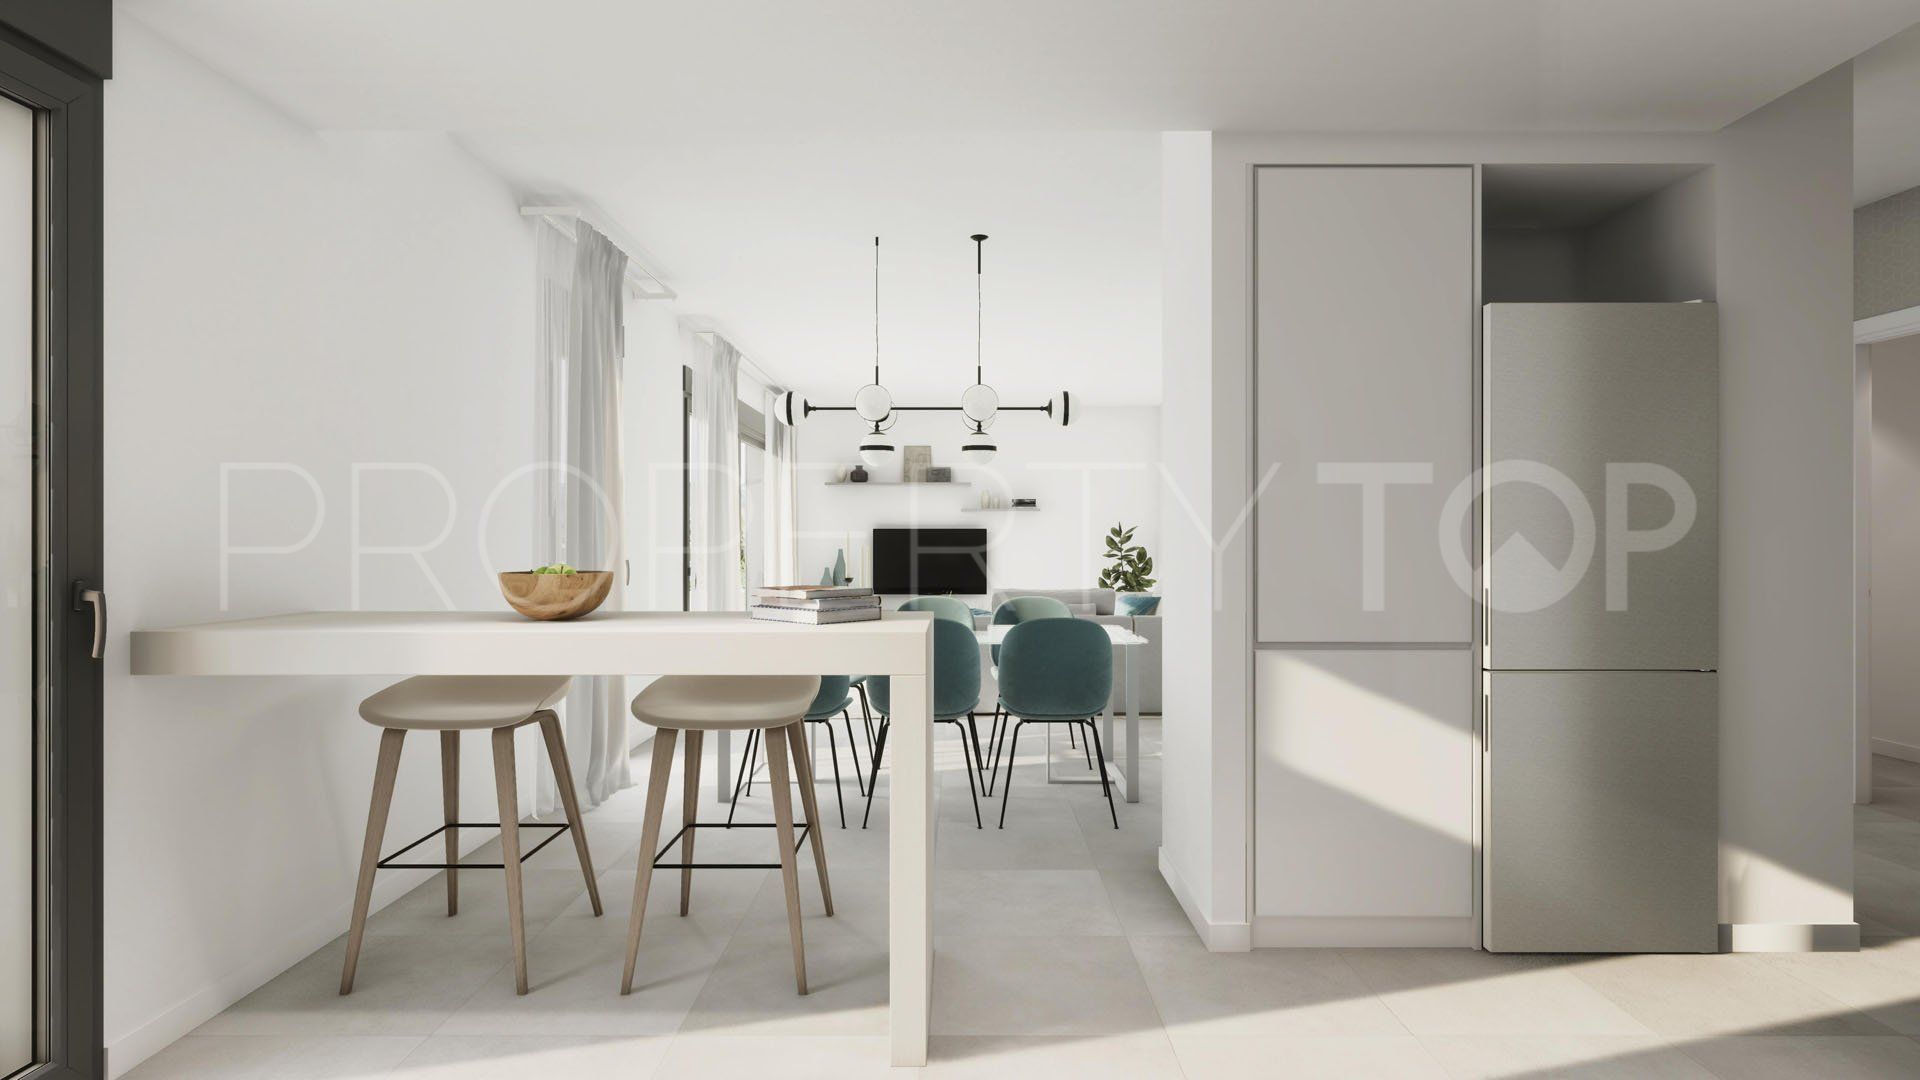 Buy Guadalobon ground floor apartment with 2 bedrooms